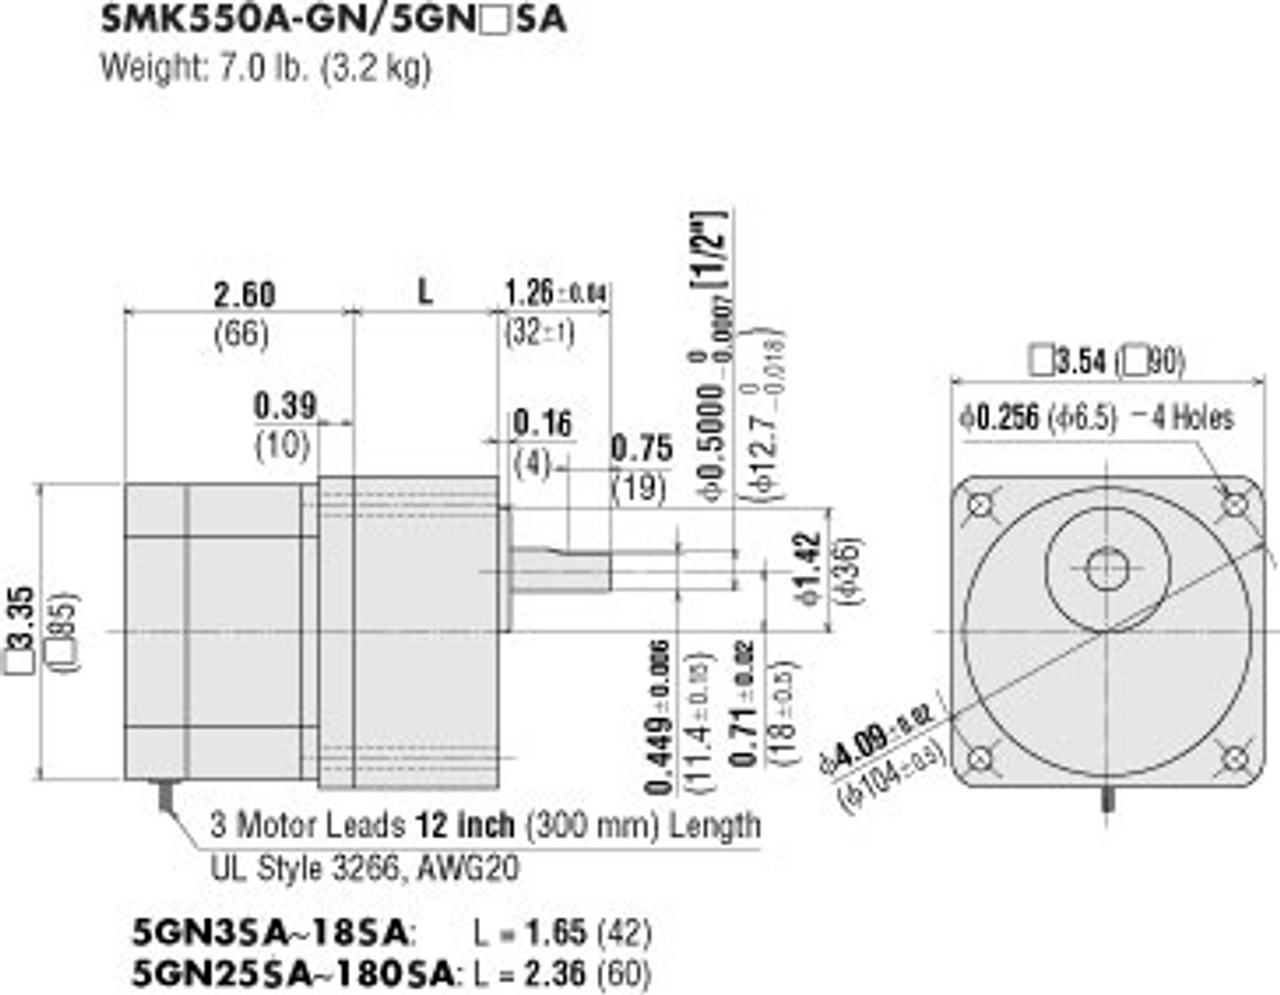 SMK550A-GN / 5GN25SA - Dimensions